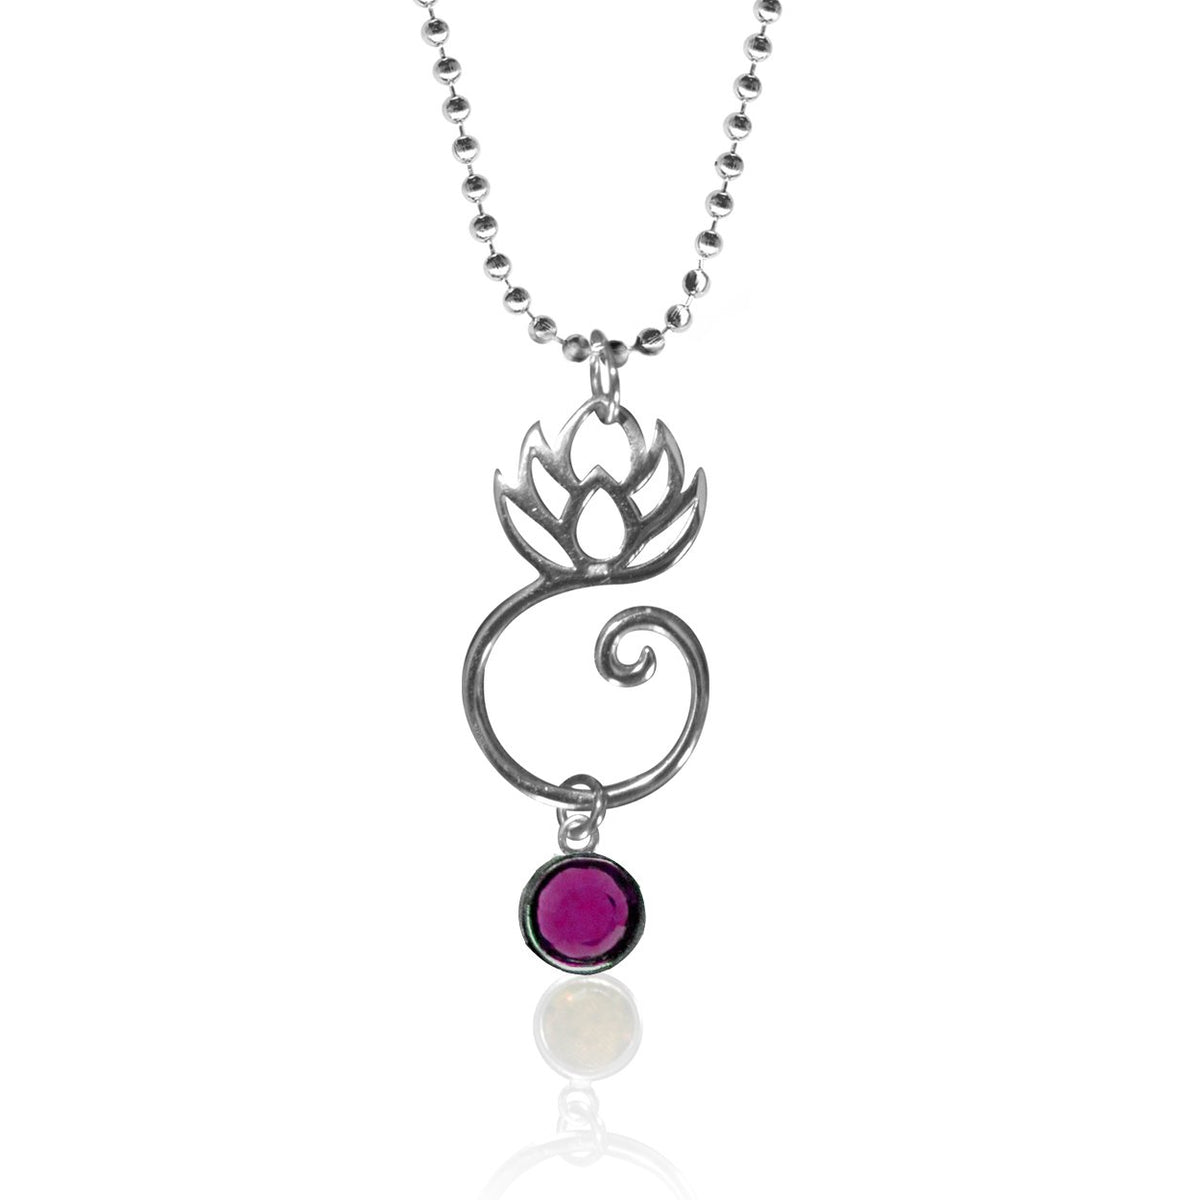 Spiritual Lotus Flower Yoga Necklace with a Swarowski Crystal